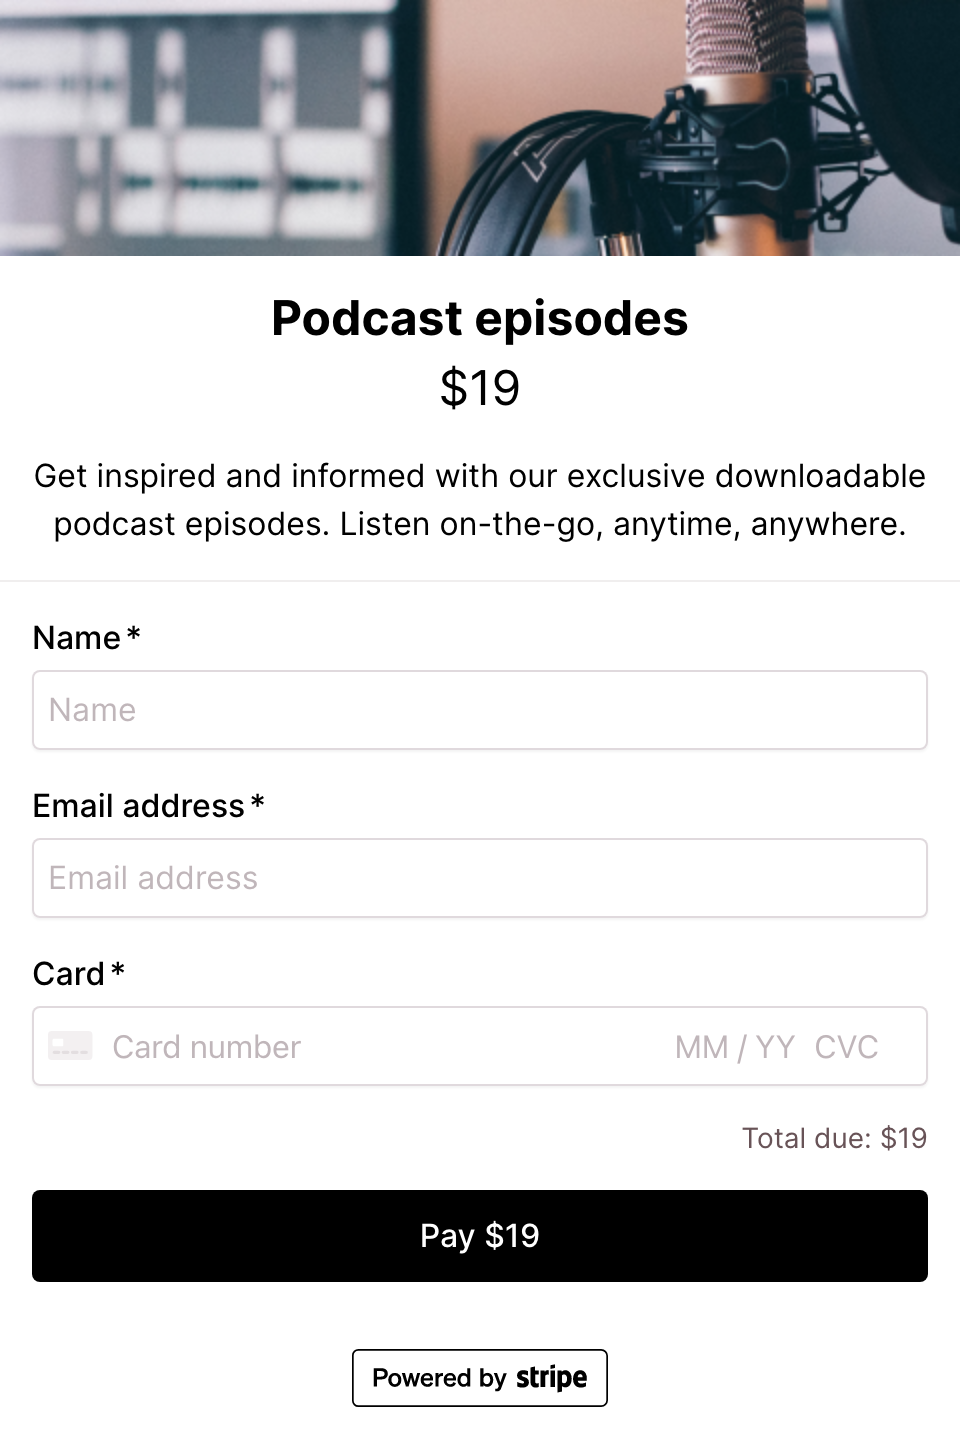 Podcast episodes checkout form